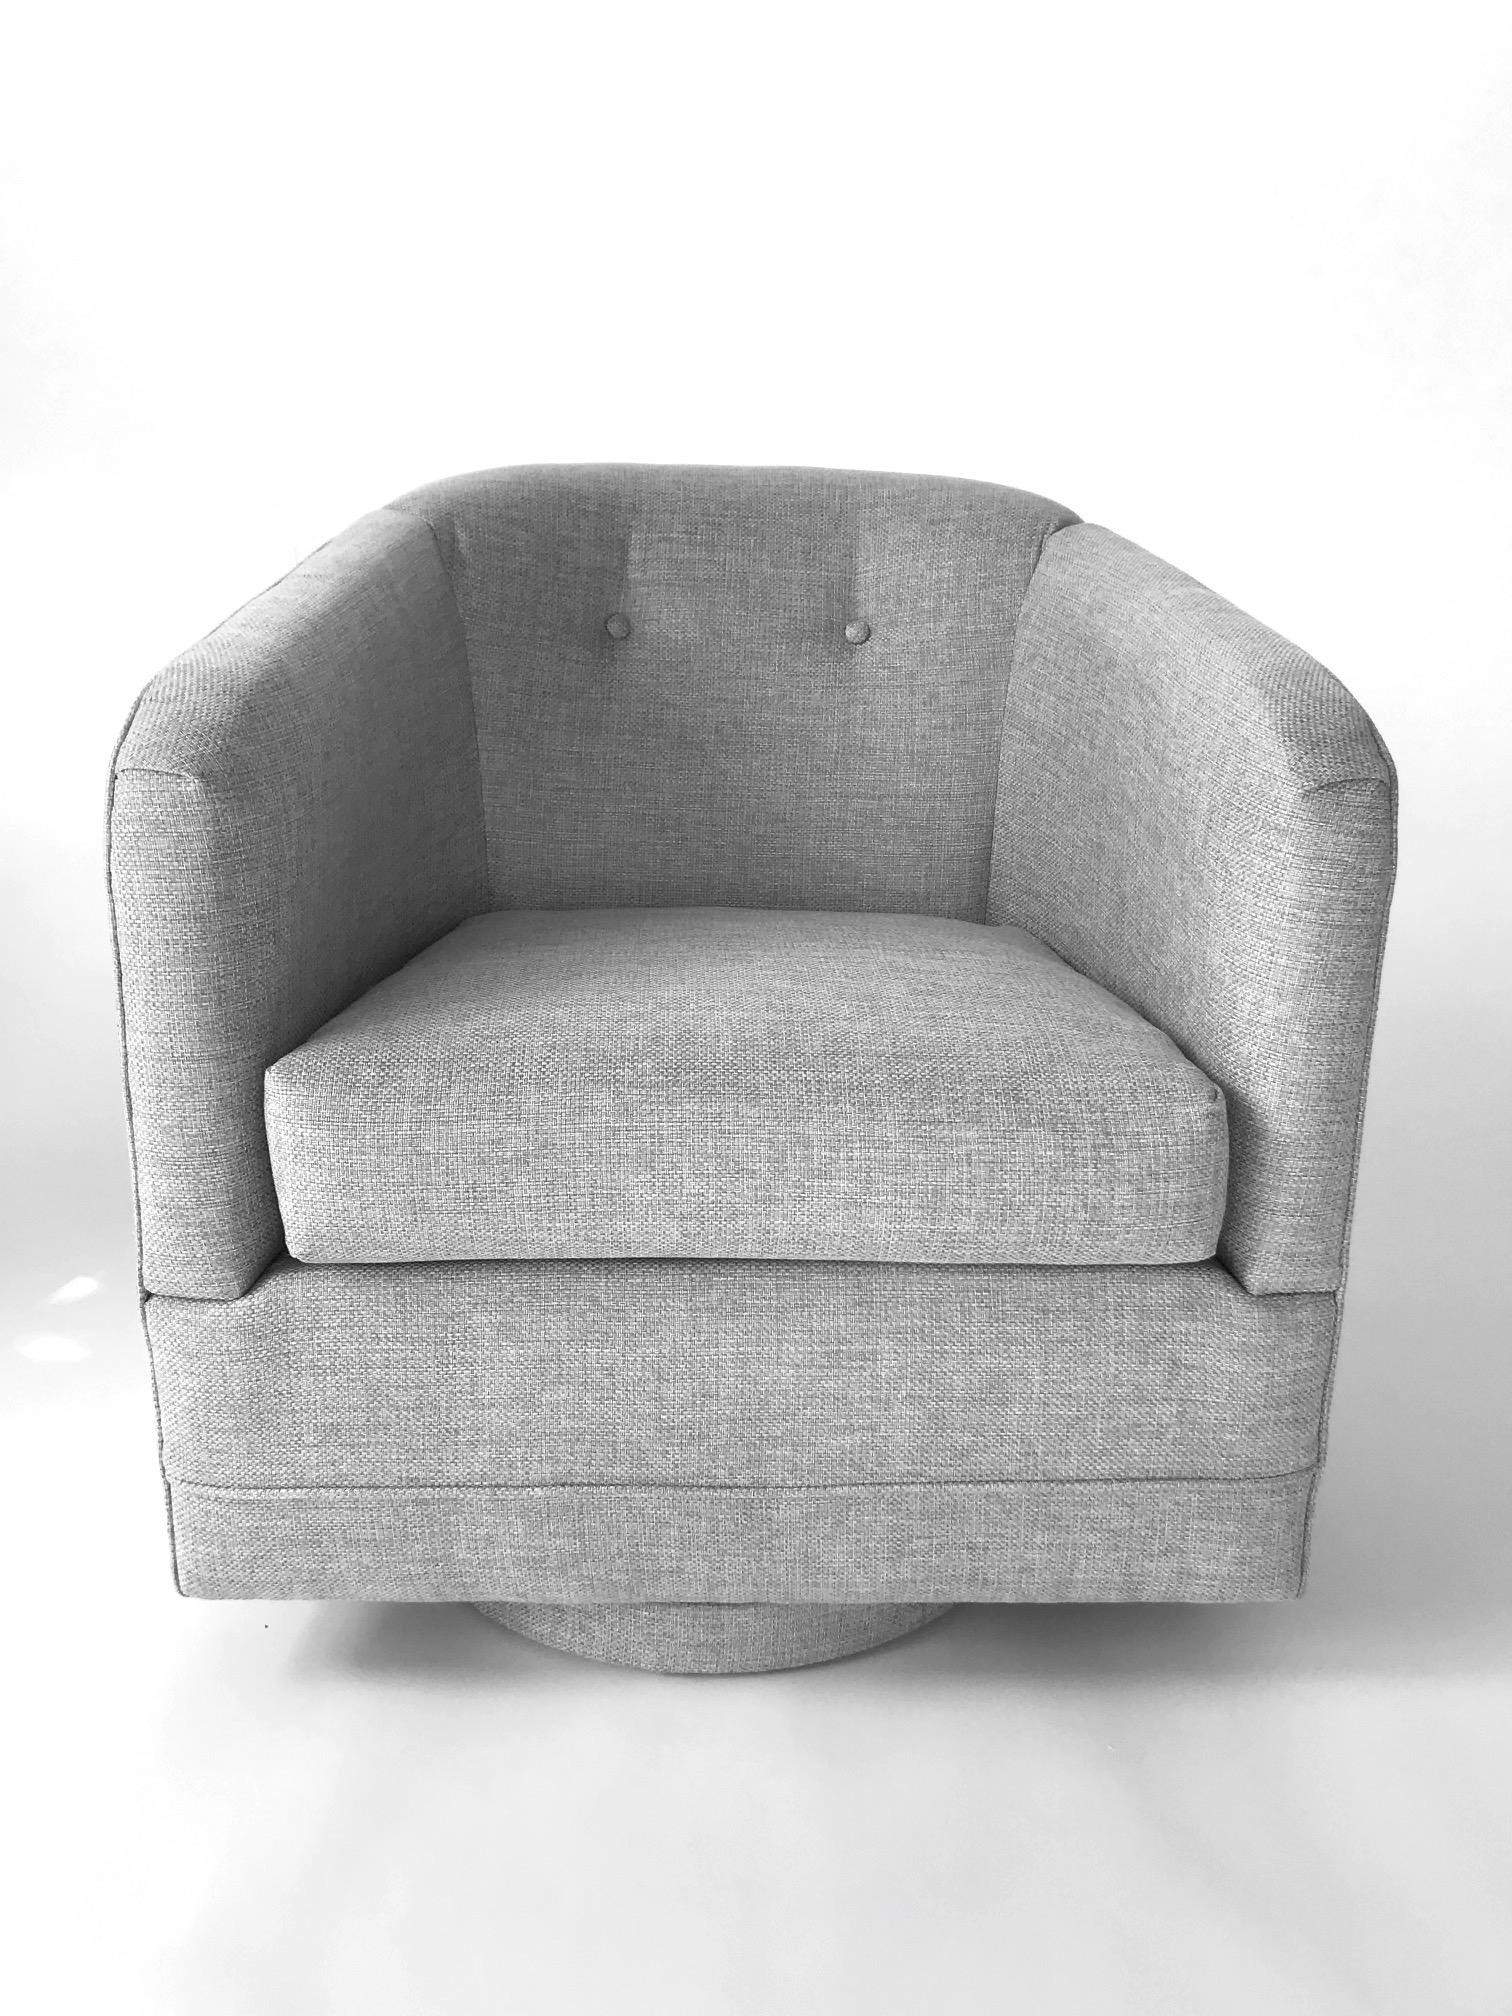 1970s Woven Upholstered Swivel Lounge Chair by Milo Baughman (Moderne der Mitte des Jahrhunderts)